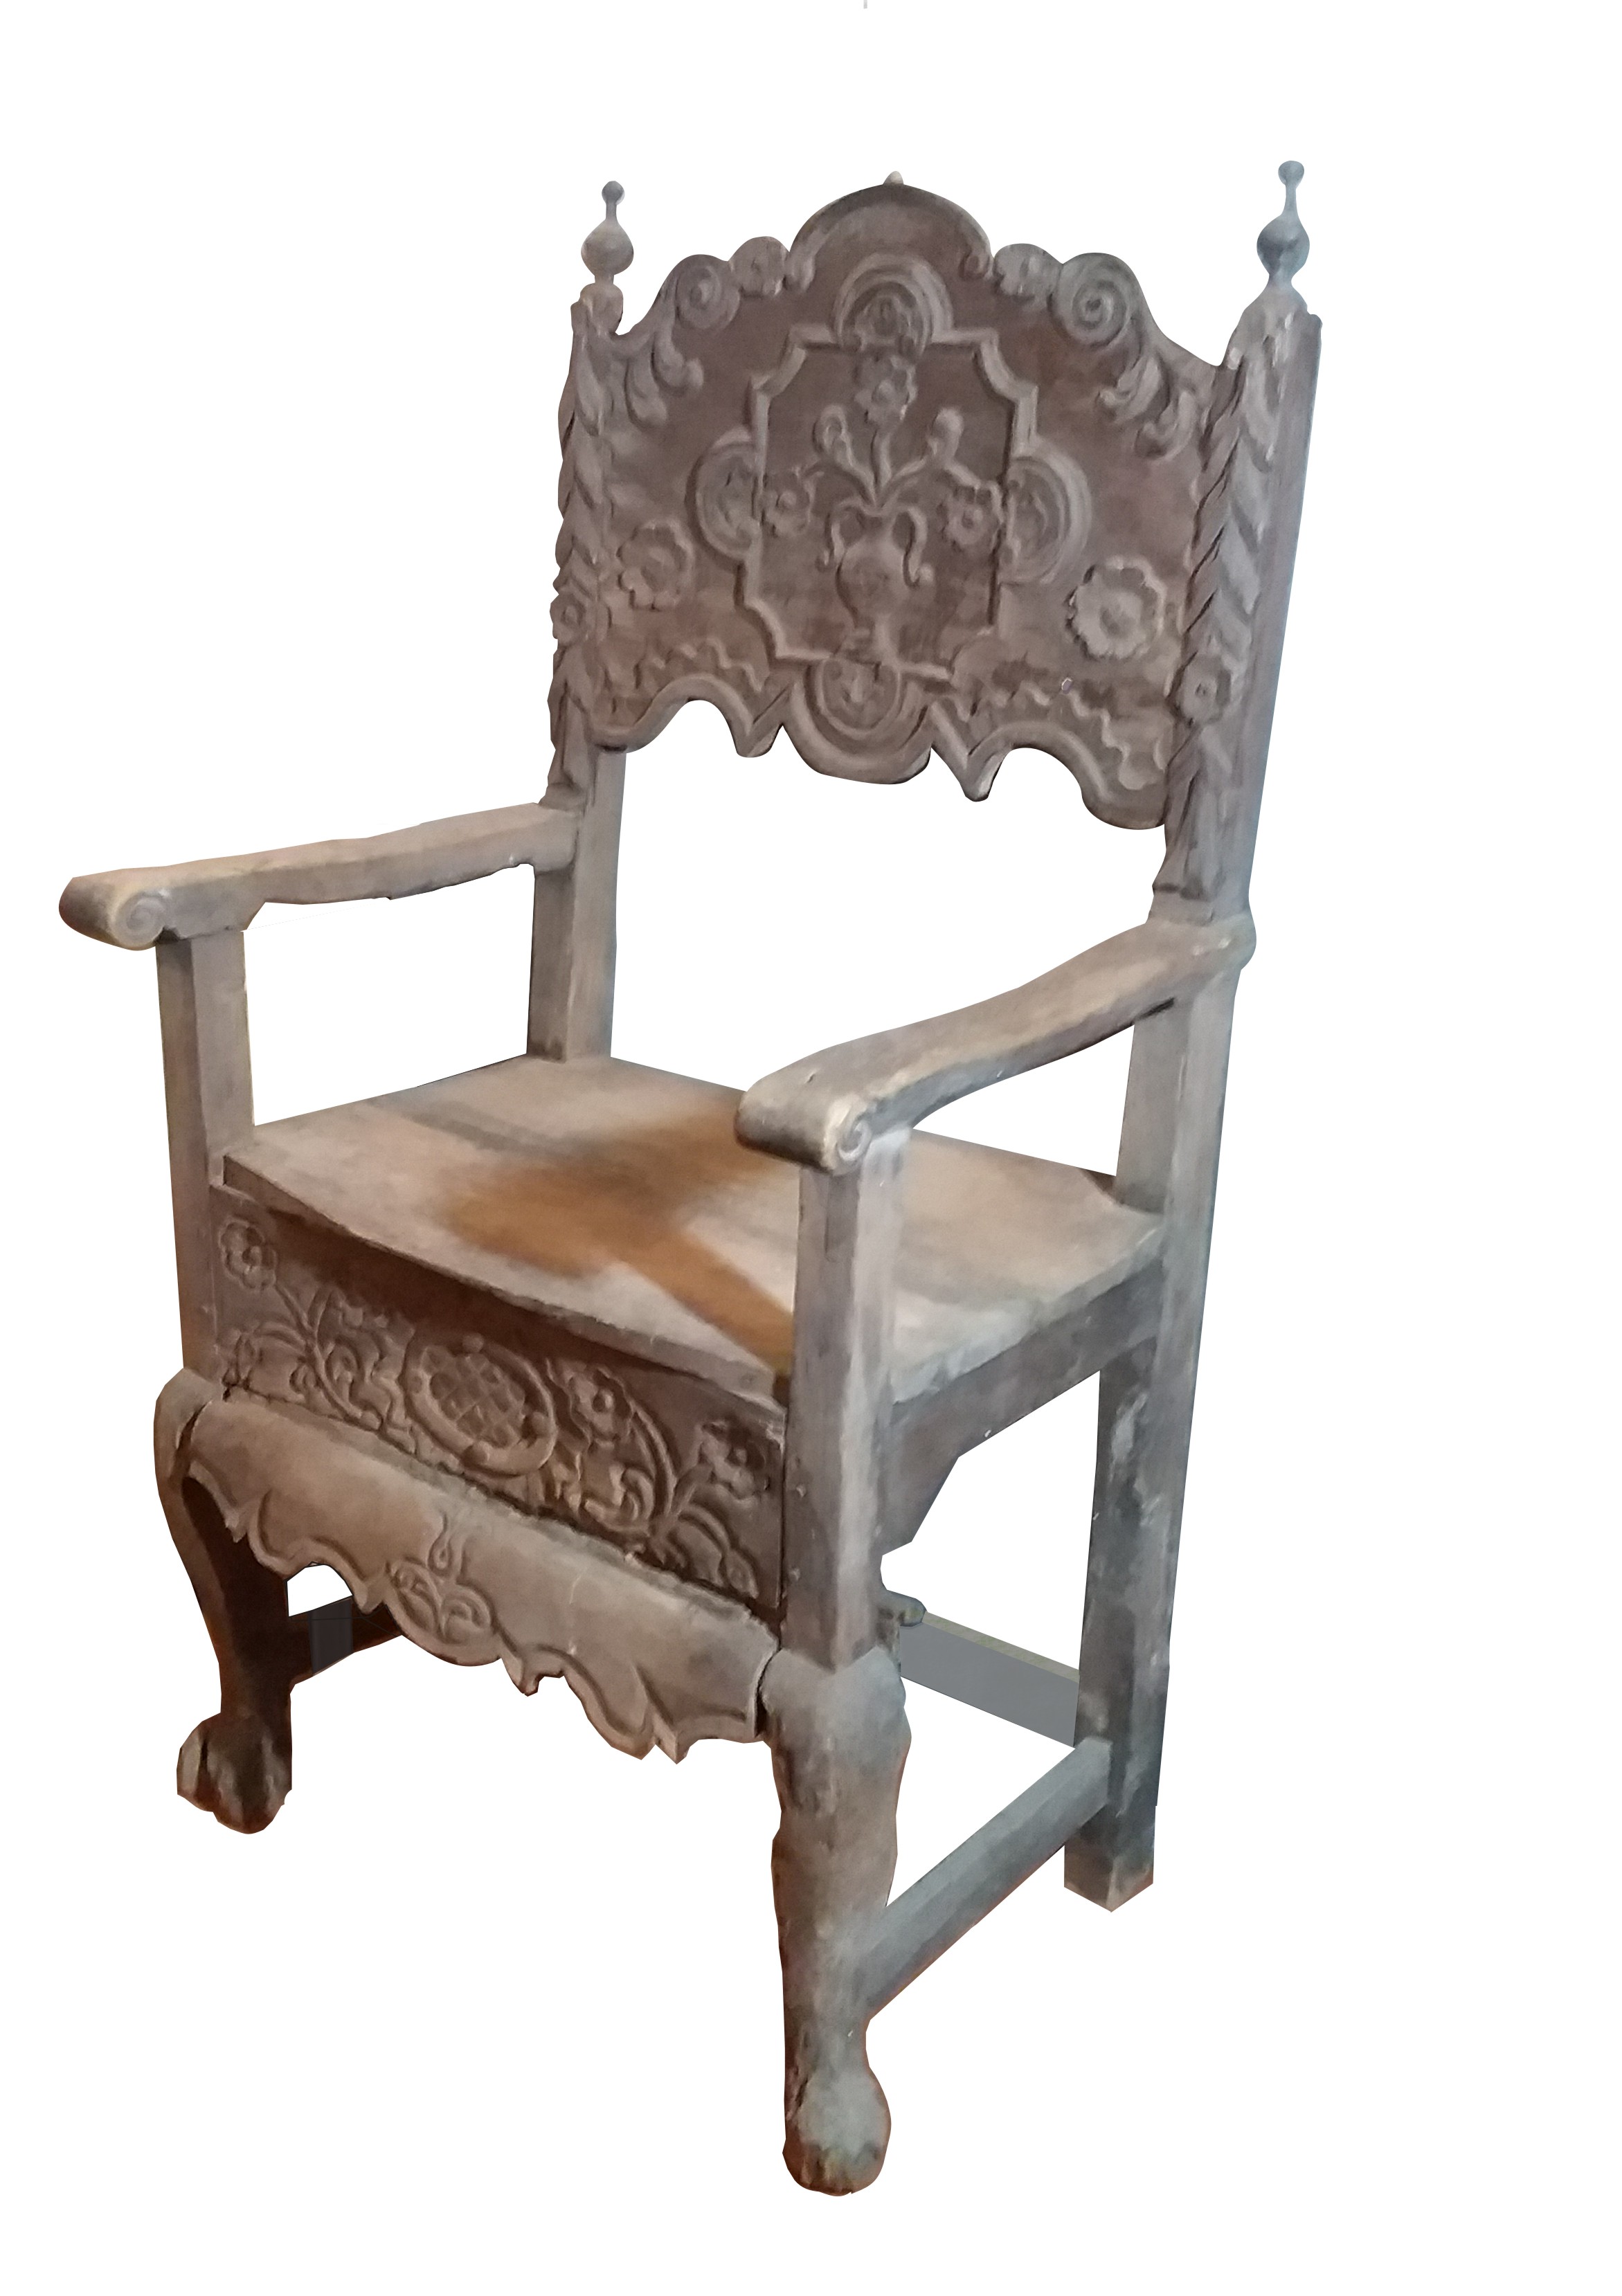 Side View Wainscott Arm Chair.jpg